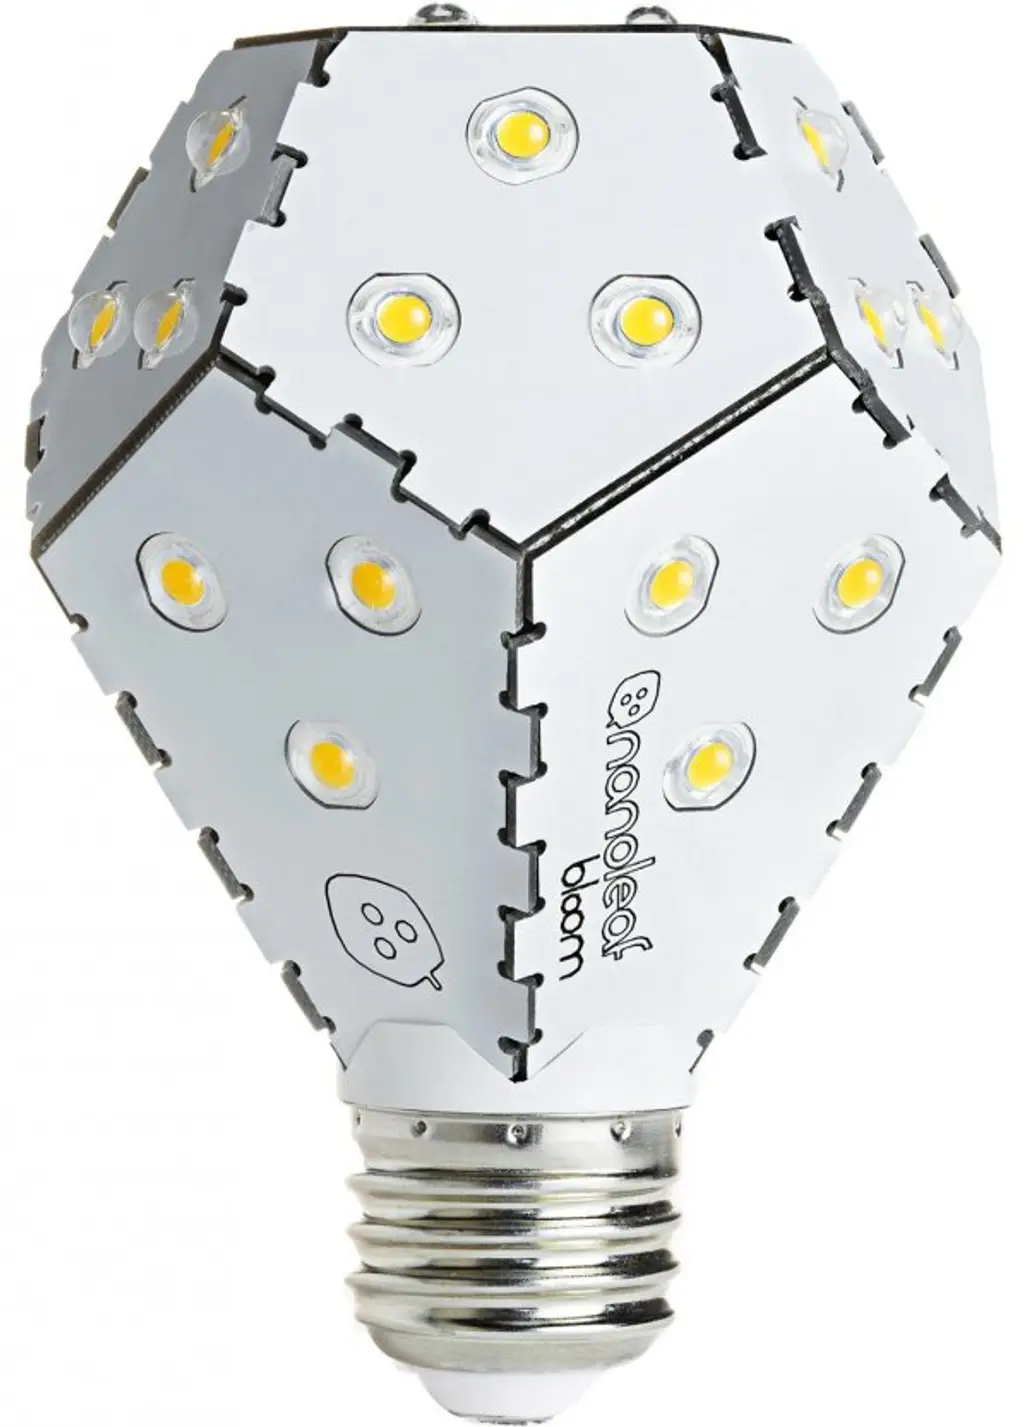 lighting, product, lamp, light fixture, incandescent light bulb,